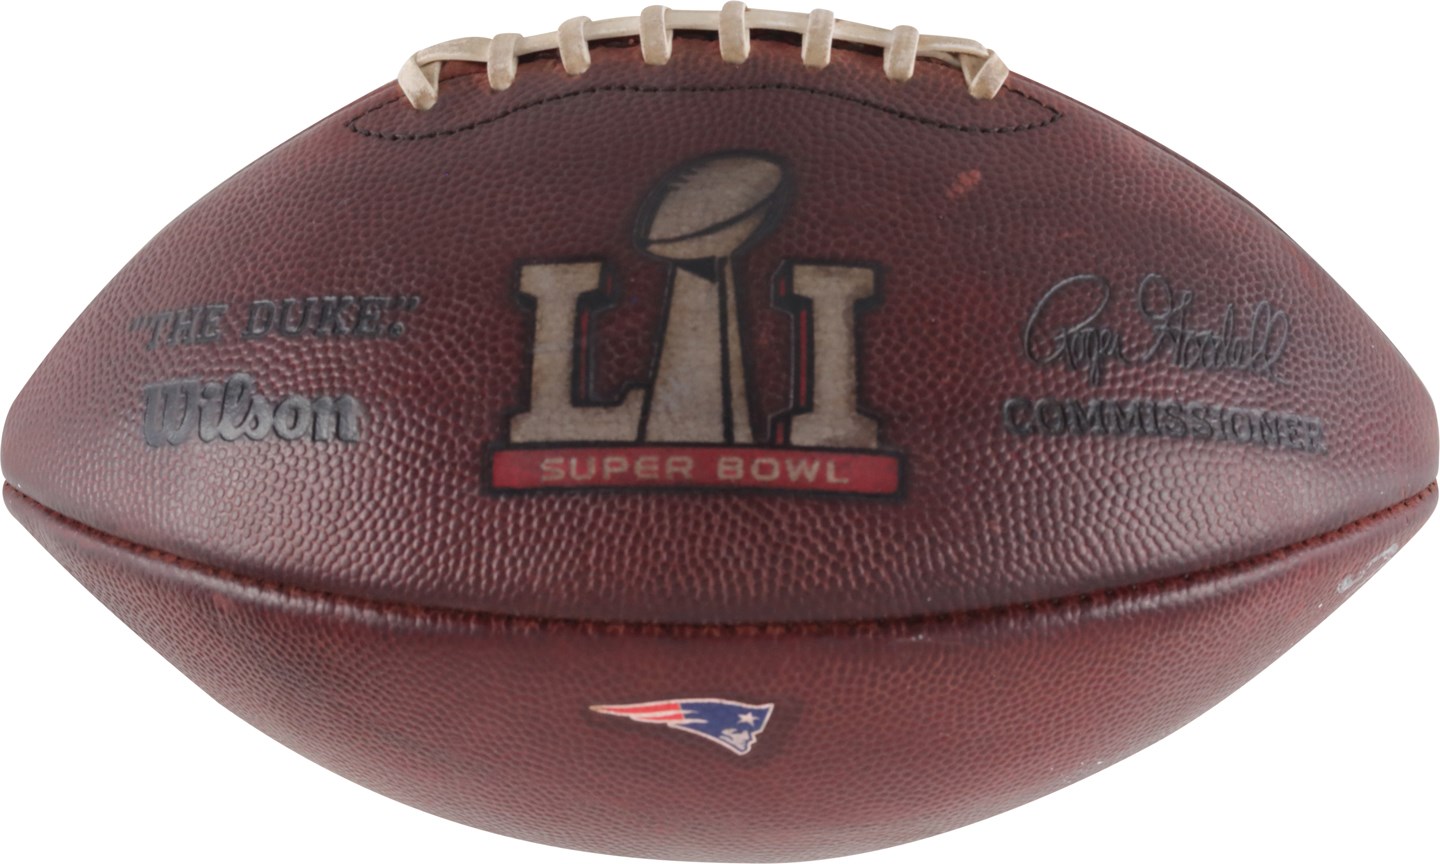 - 2017 Super Bowl LI New England Patriots Game Used Football - Historic Comeback (PSA)